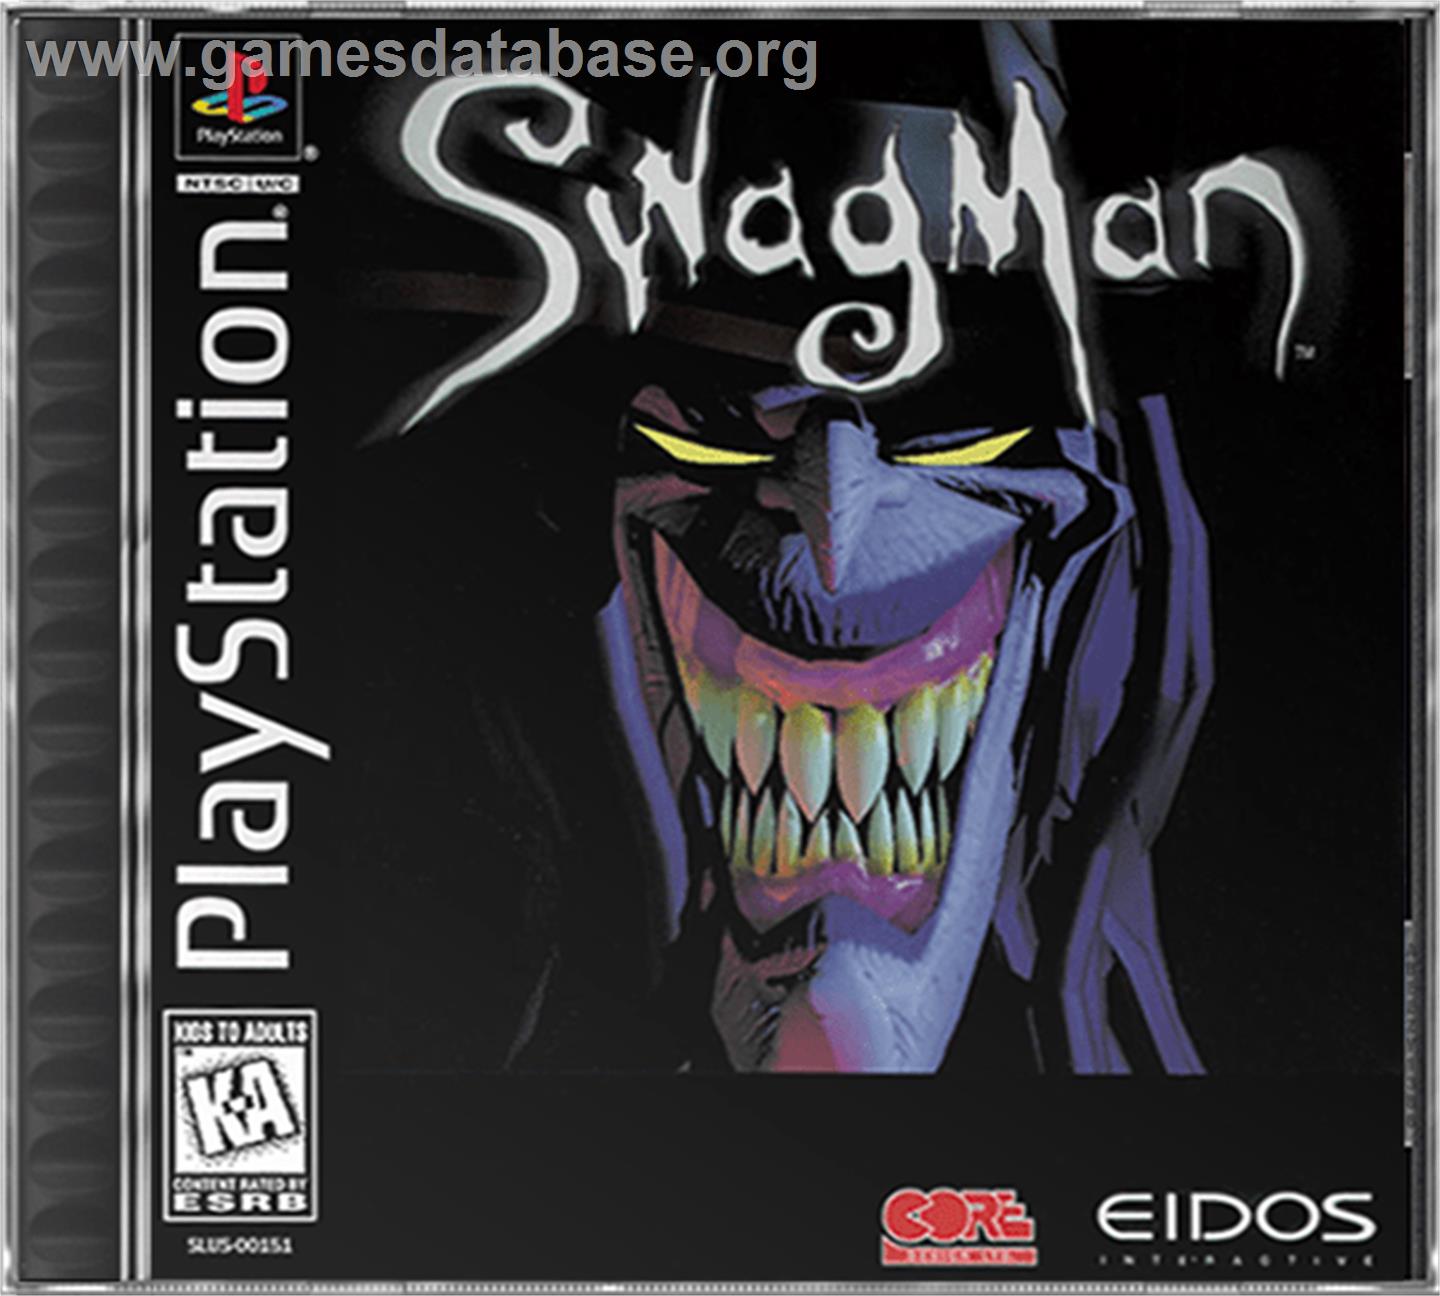 Swagman - Sony Playstation - Artwork - Box